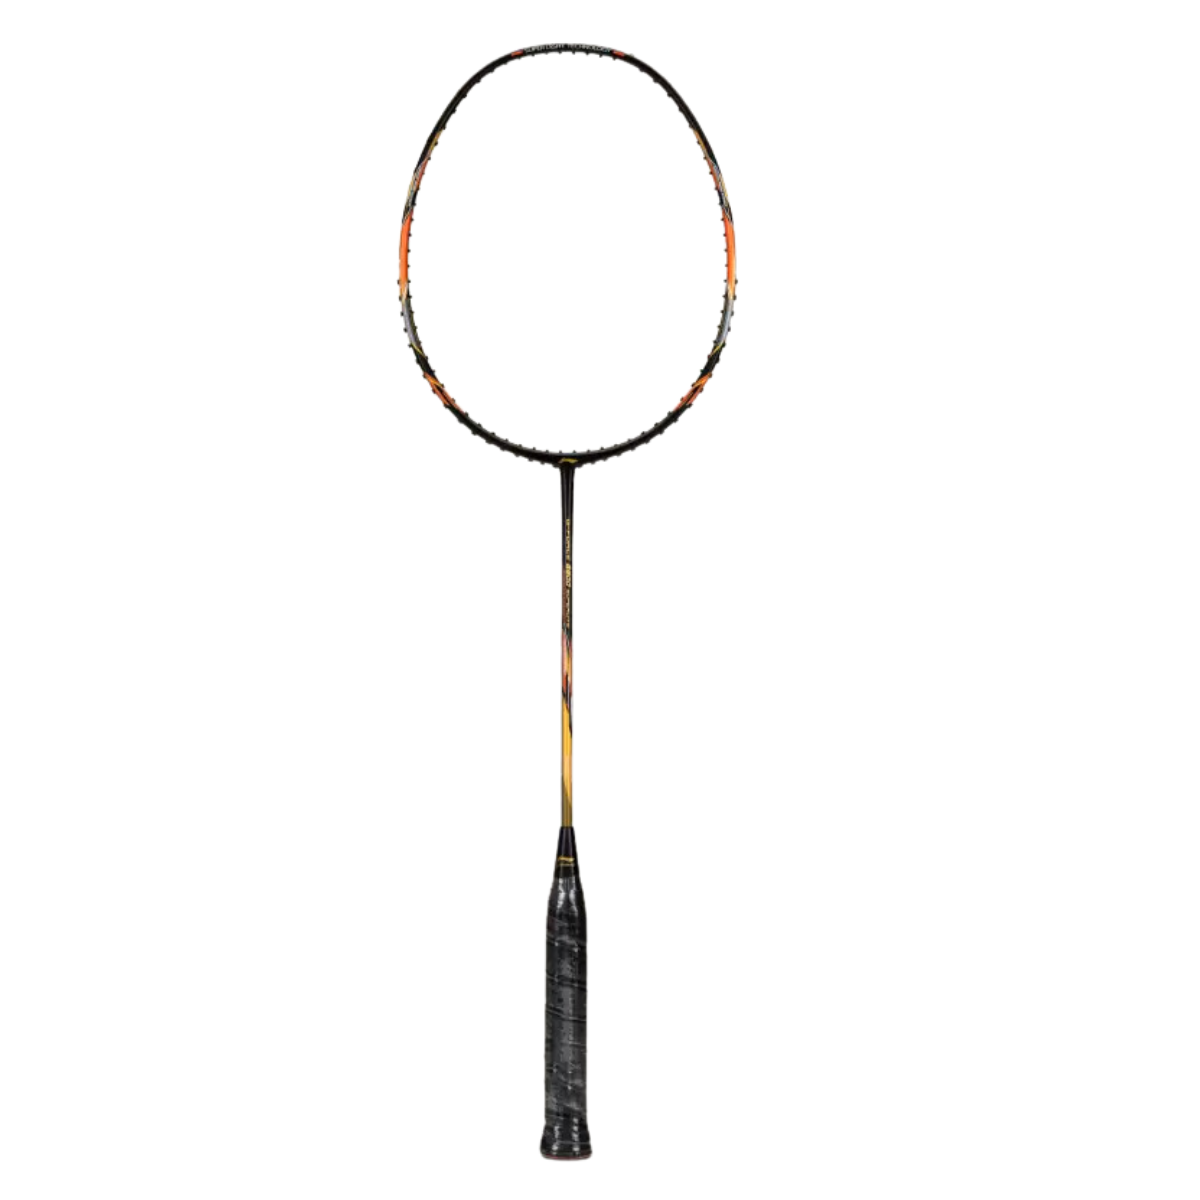 Li-Ning G Force 5900 Superlite Unstrung Badminton Racket